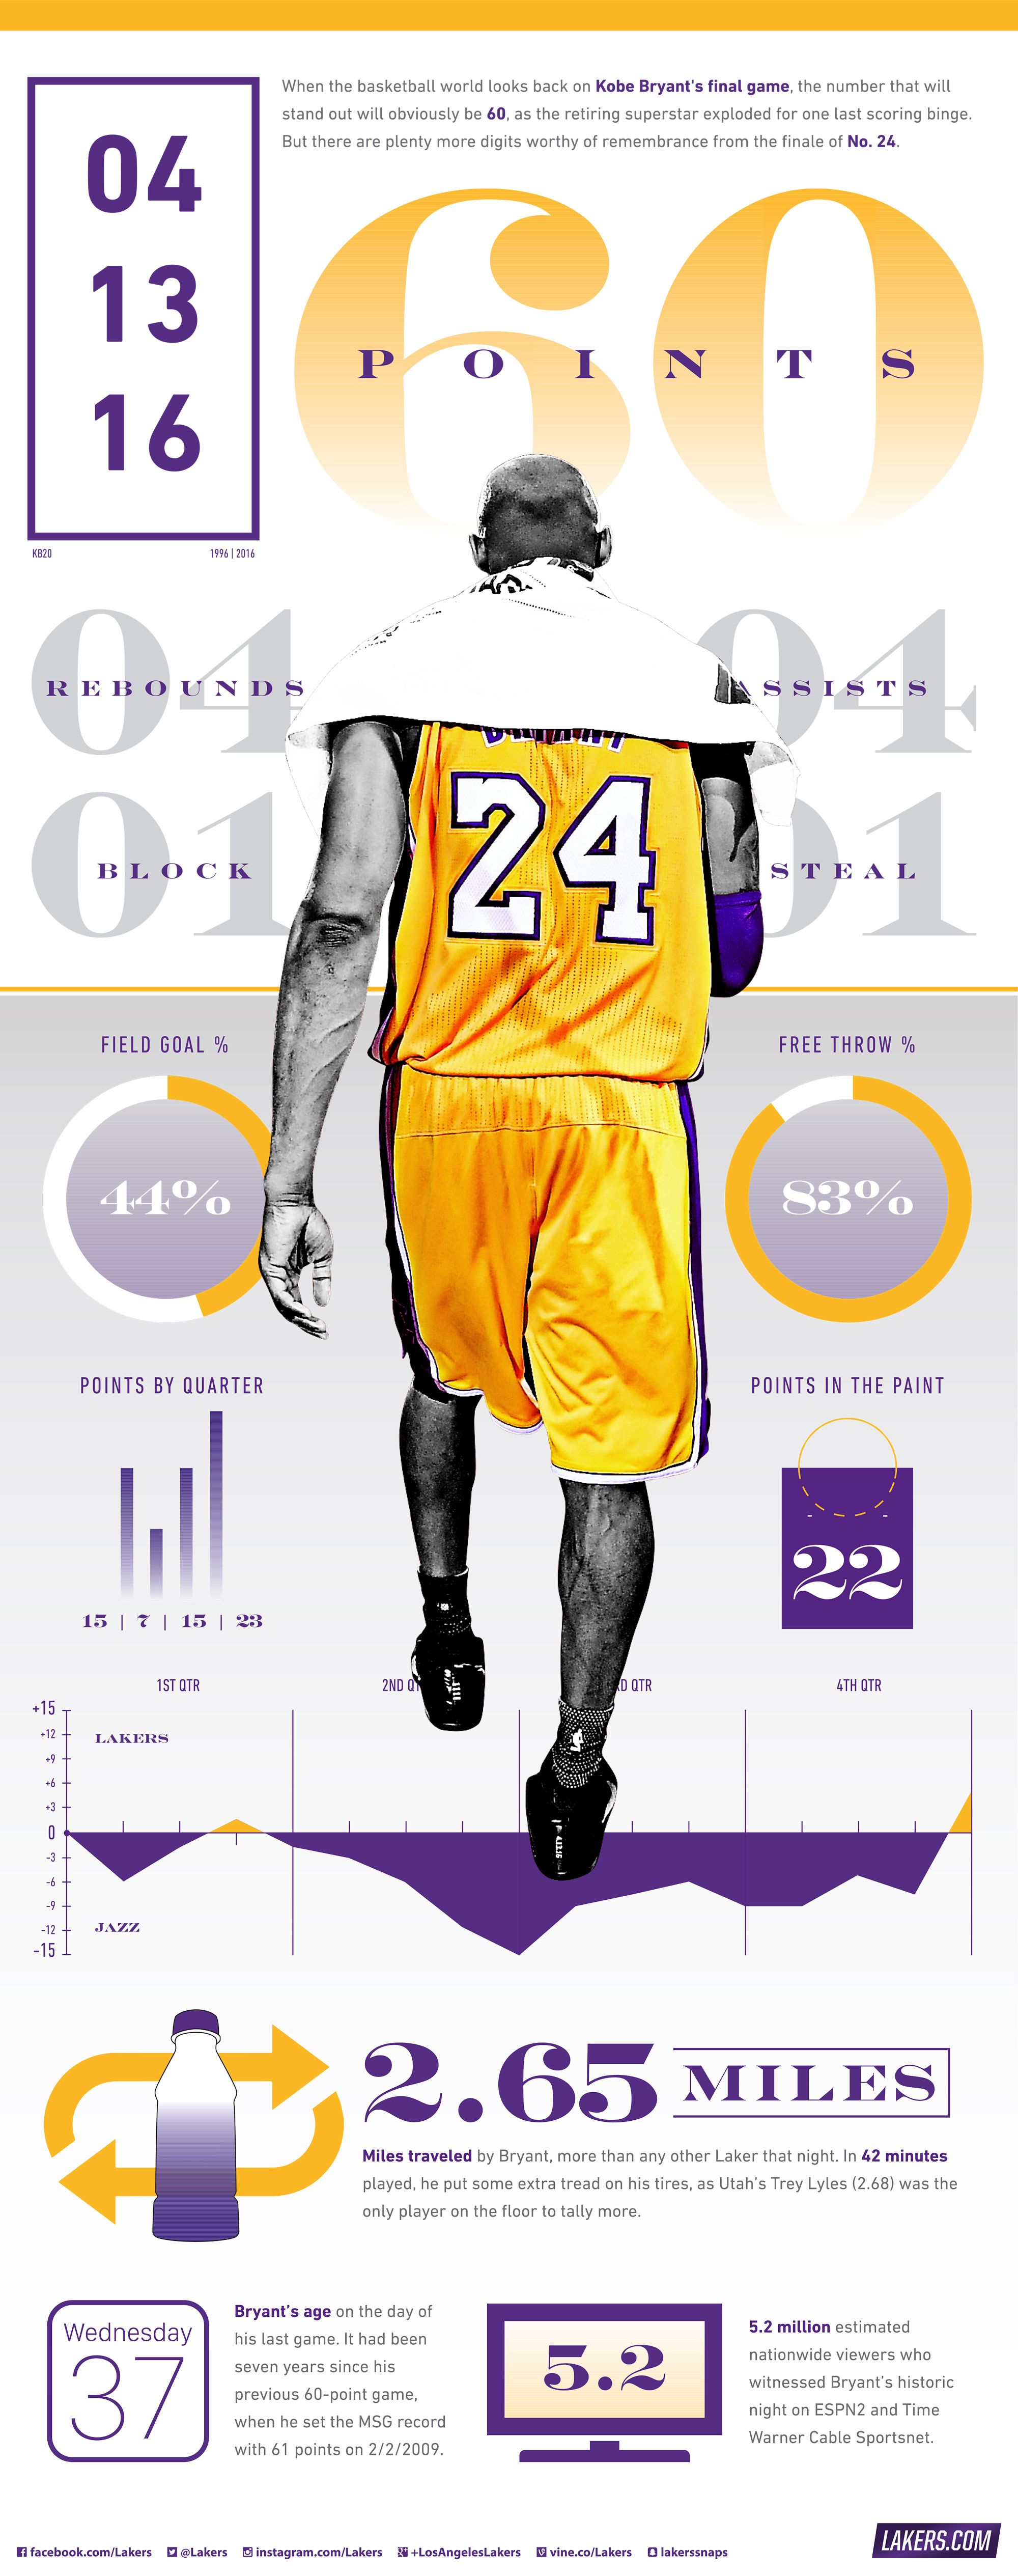 Download Jersey Numbers Kobe Bryant iPhone Wallpaper